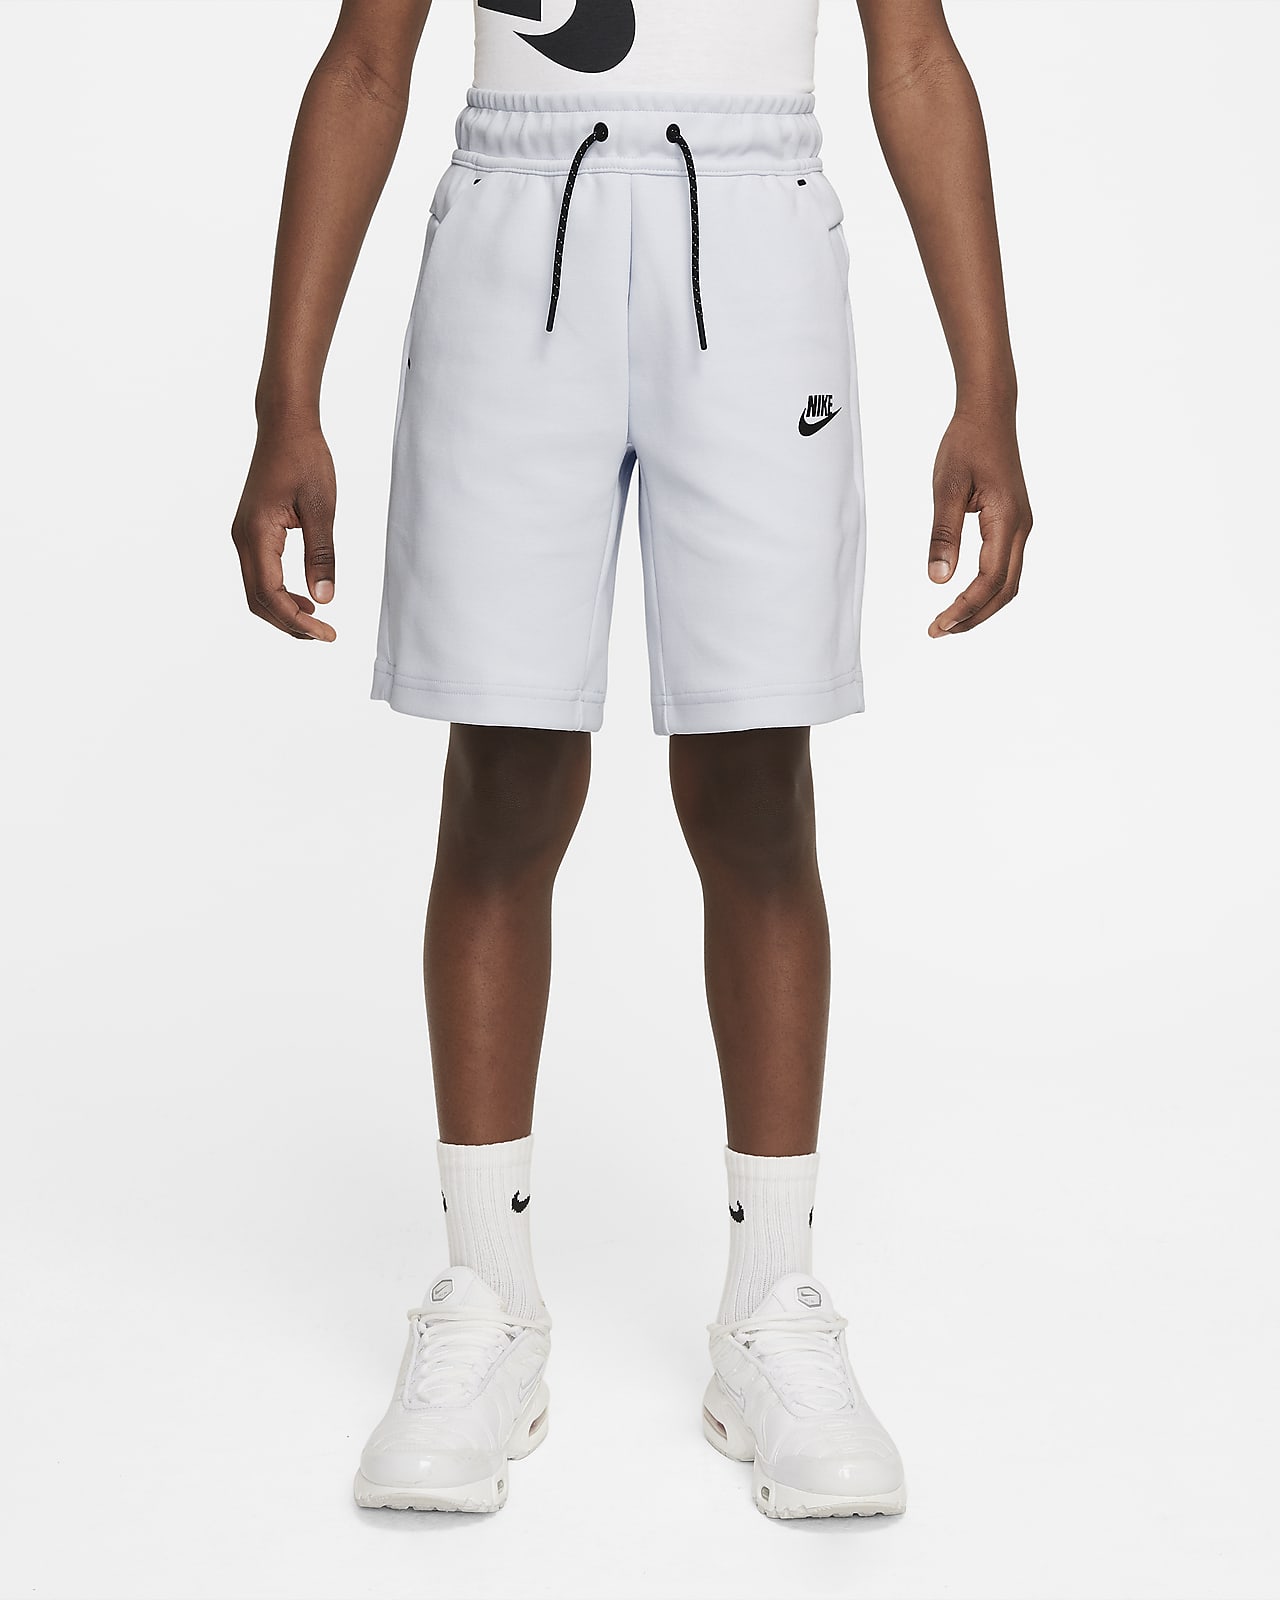 Nike Sportswear Tech Fleece Pantalons curts - Nen